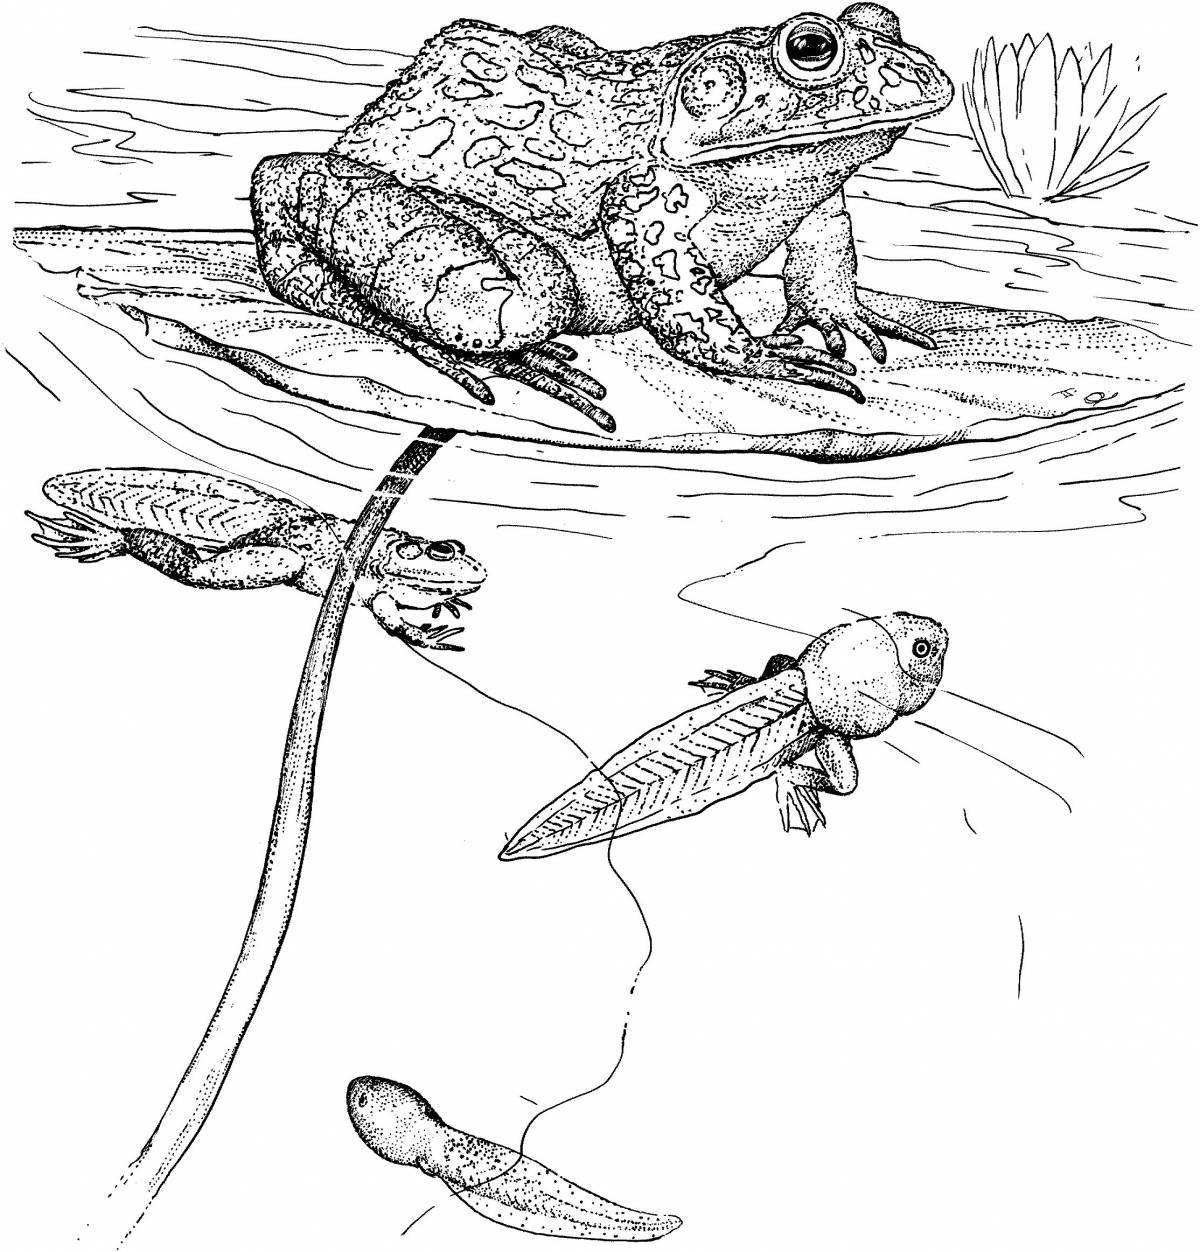 Amphibian playful coloring page